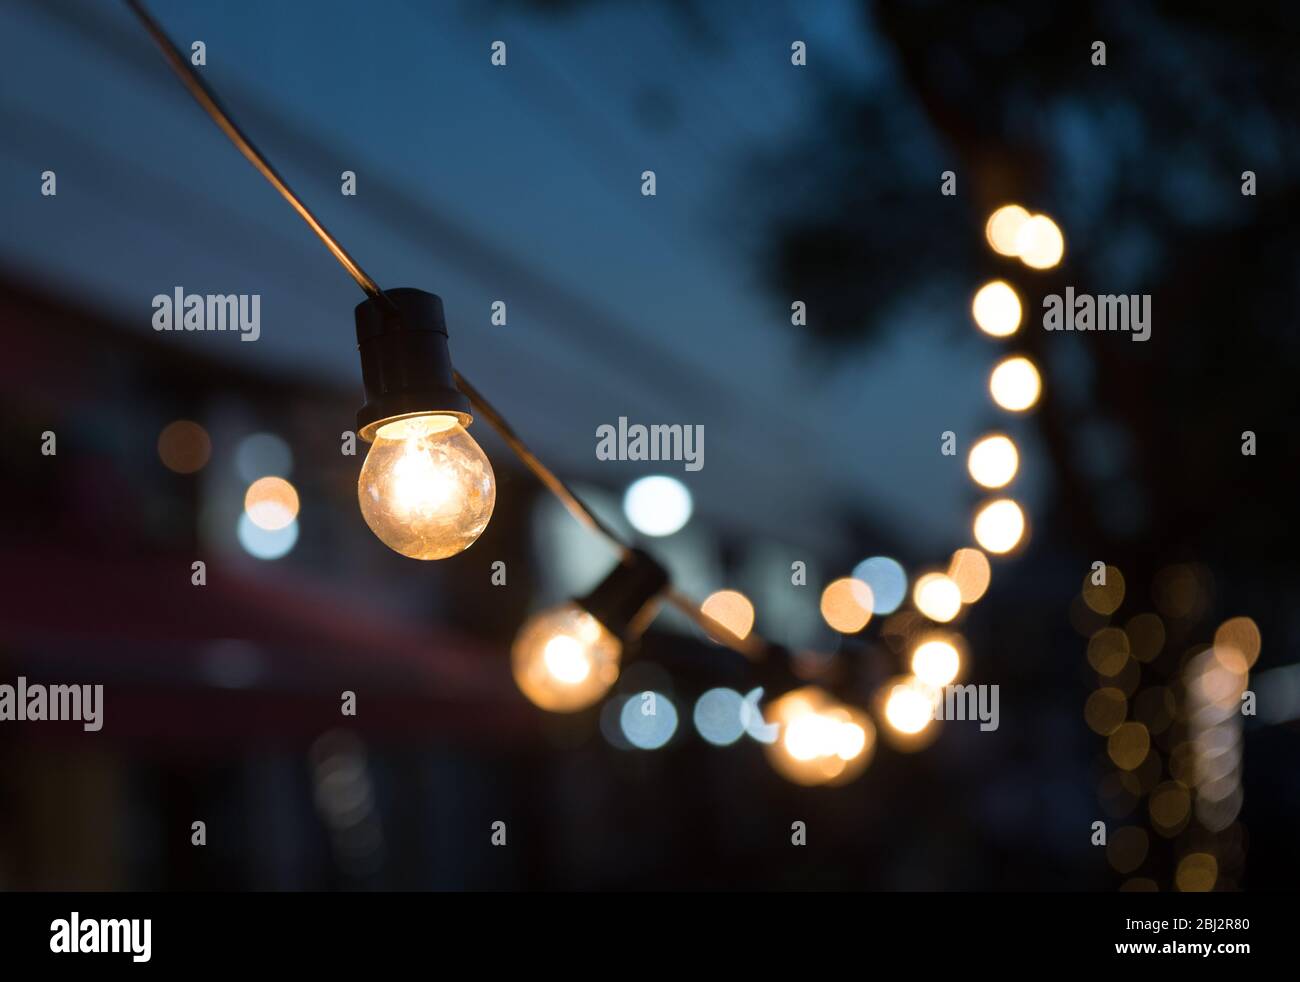 Light Bulb Incandescent Lamp Transparent Stockfotos und -bilder Kaufen -  Alamy